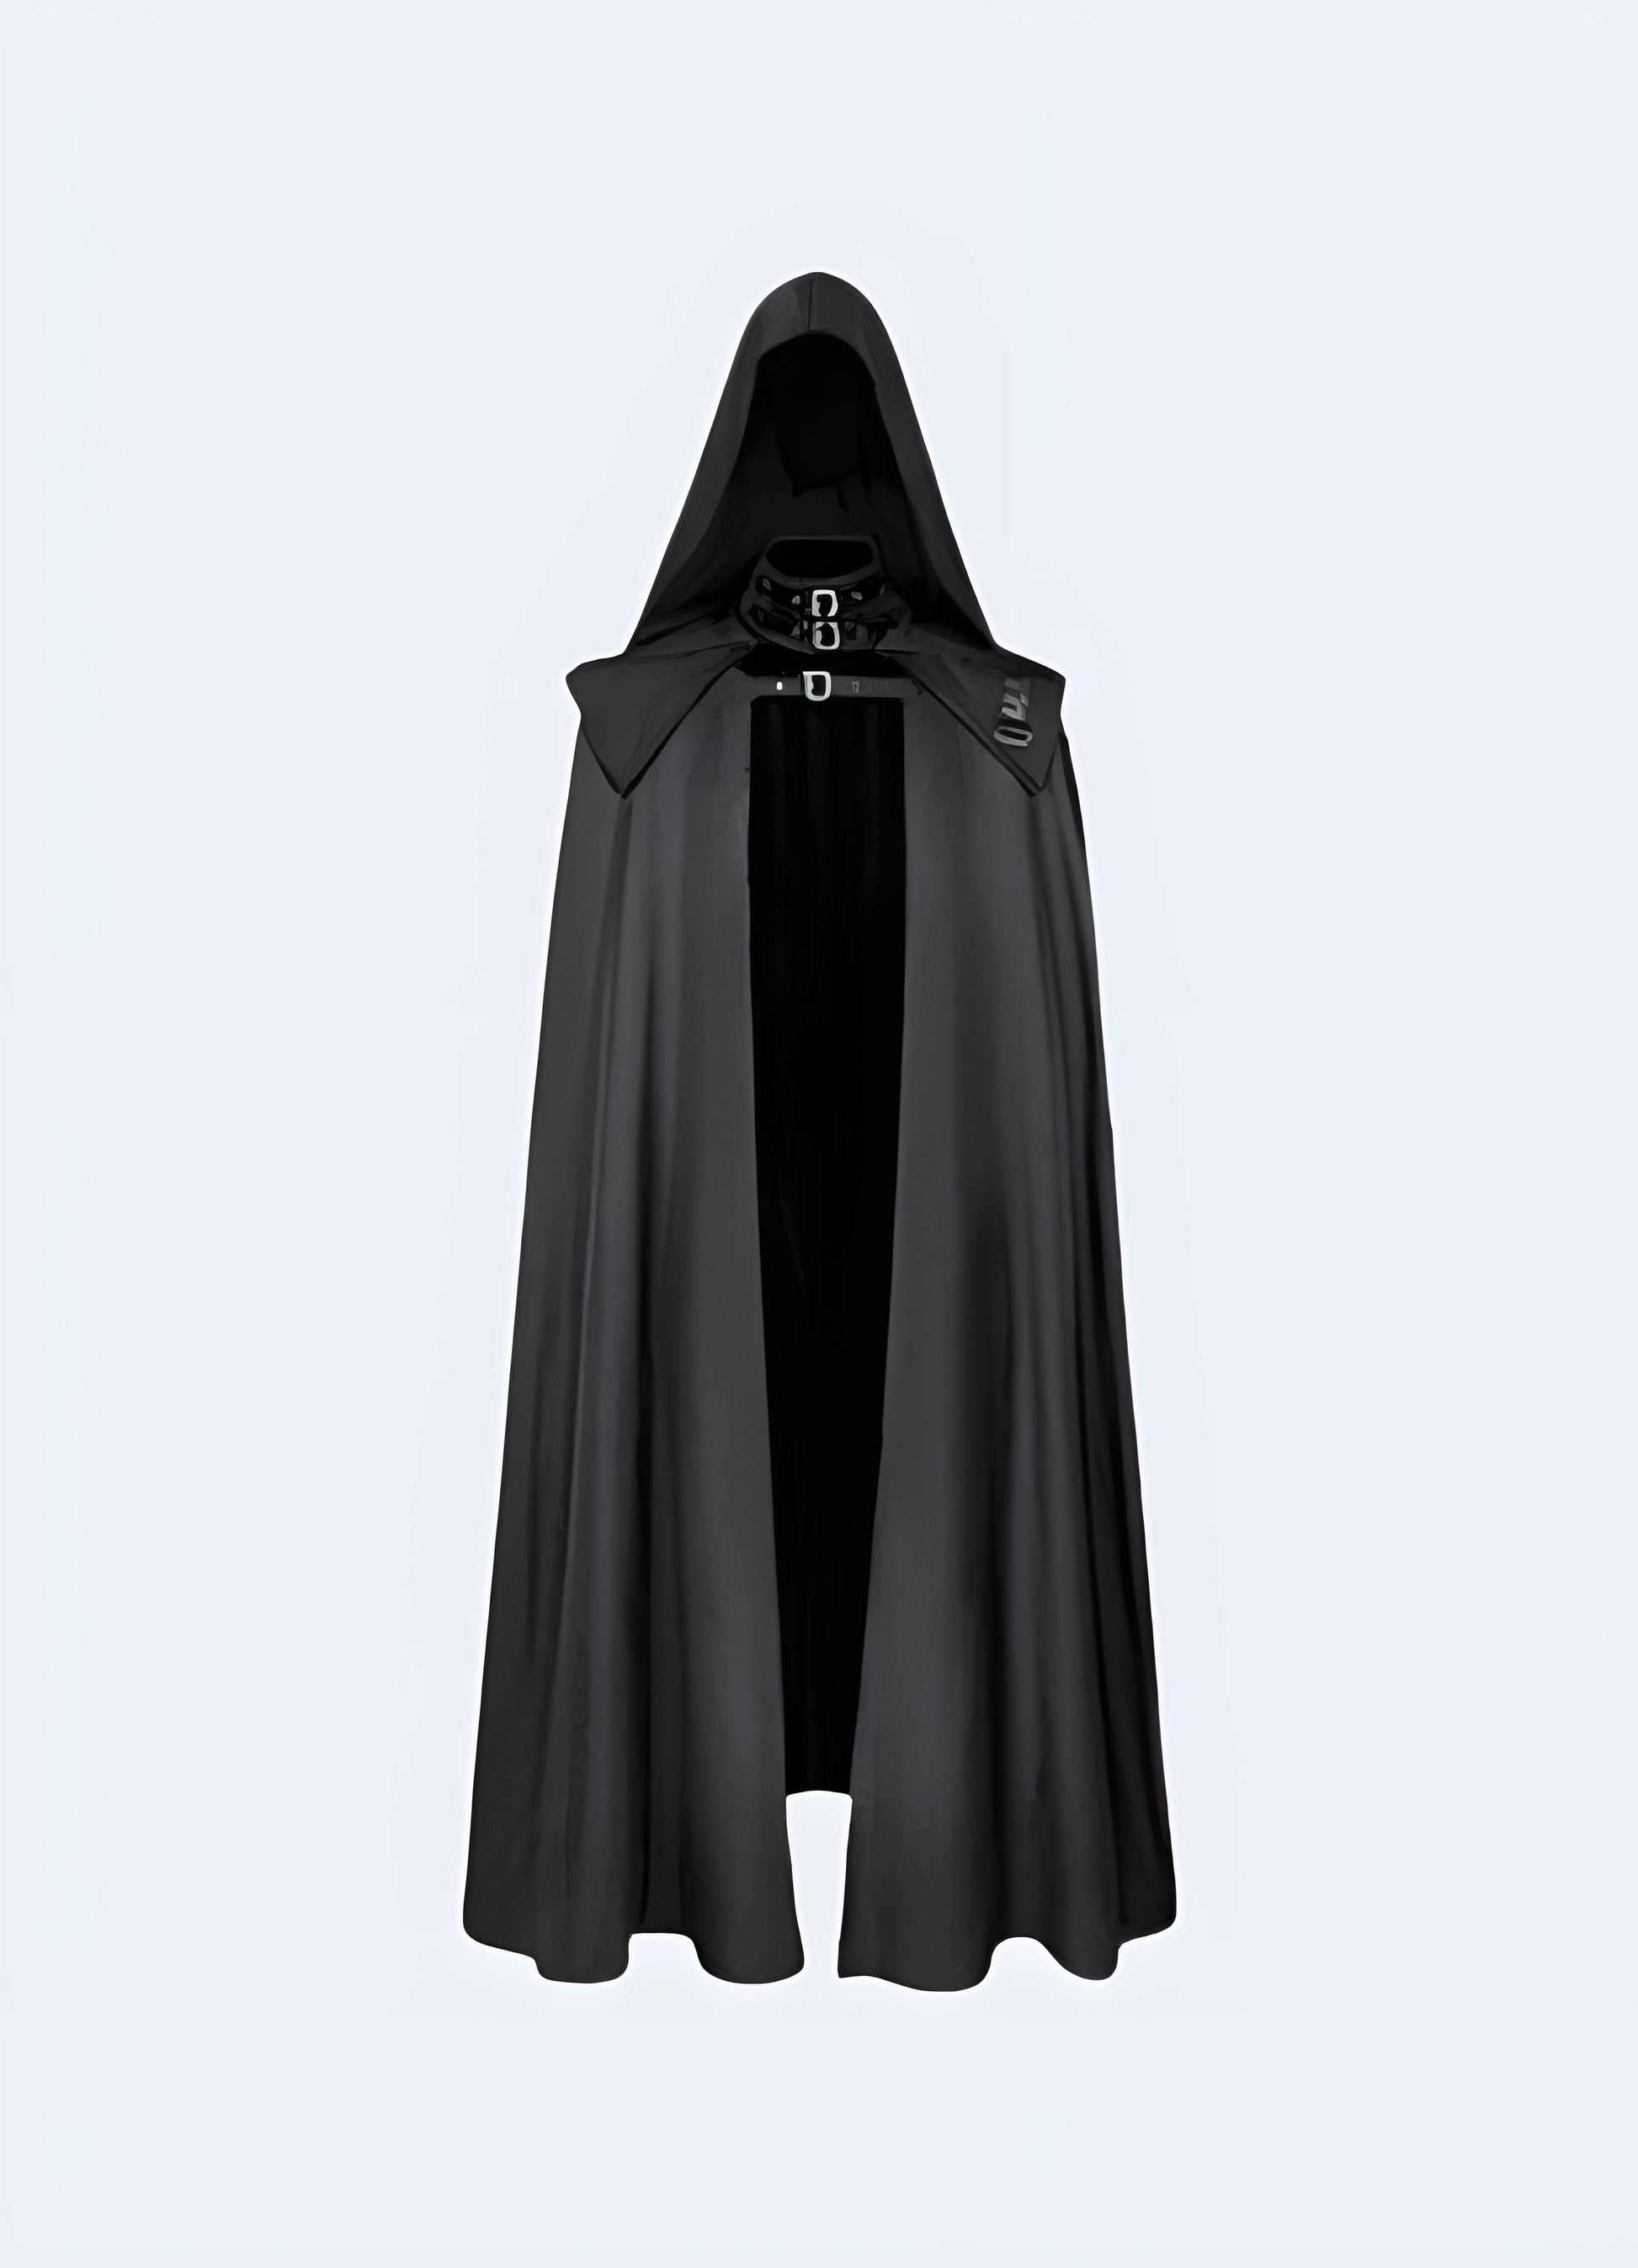 Medieval style cloak comes with hood black jedi cloak. 